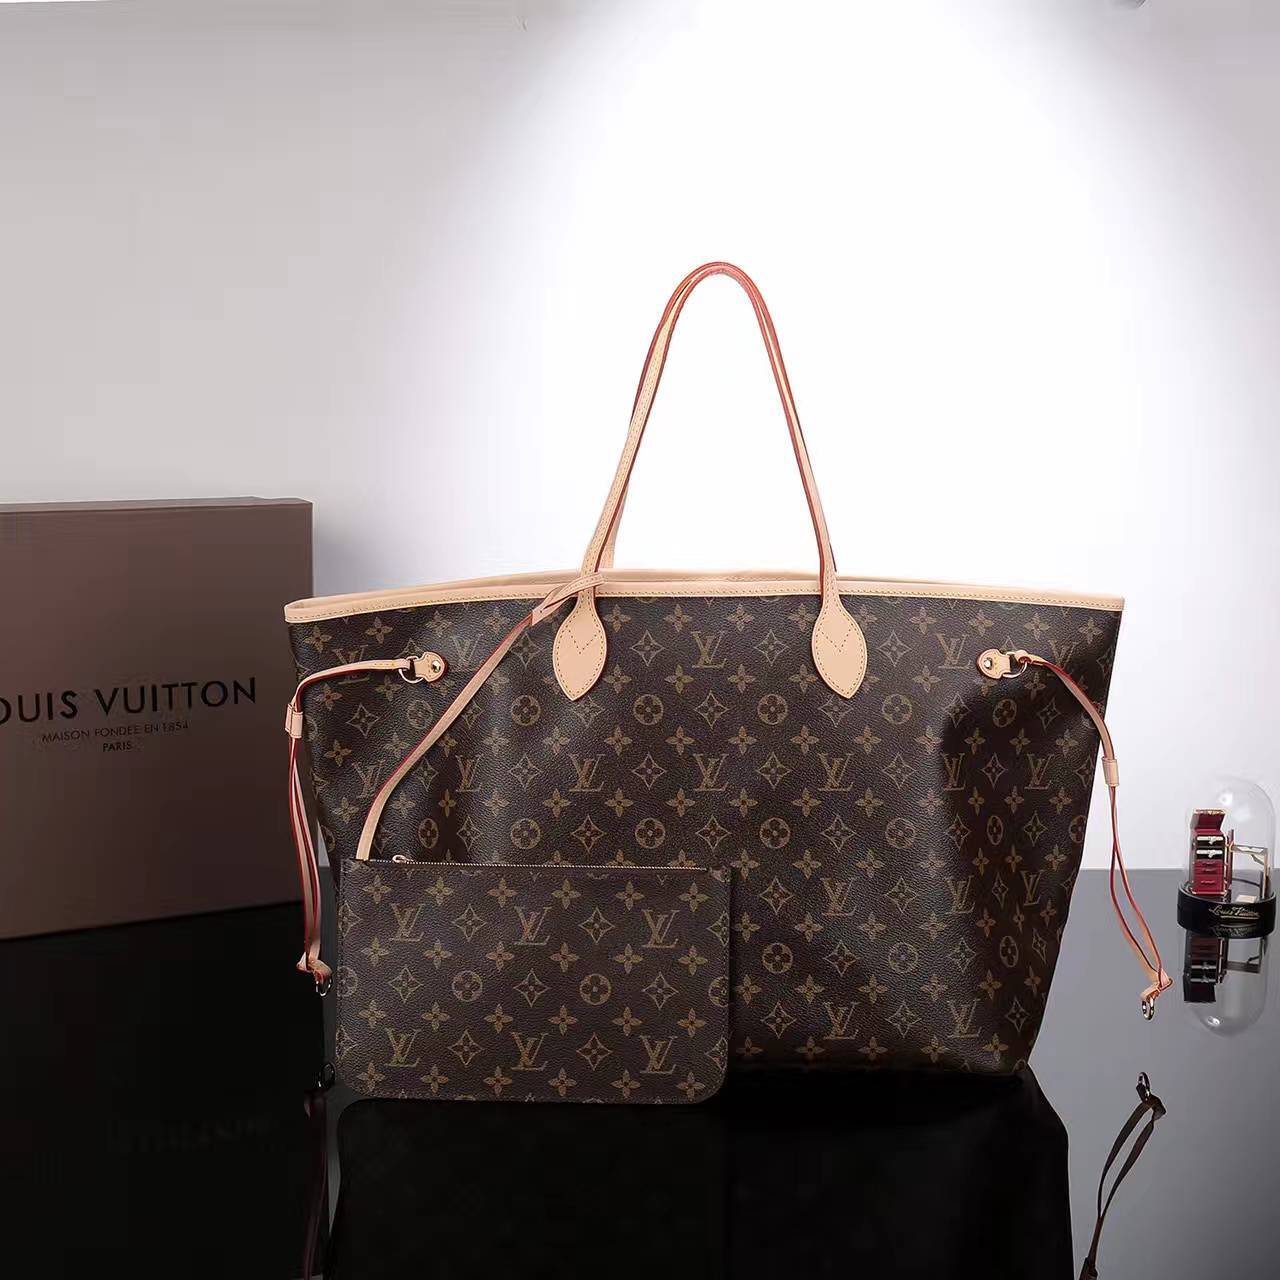 Louis Vuitton Handbags Sale Canada | NAR Media Kit